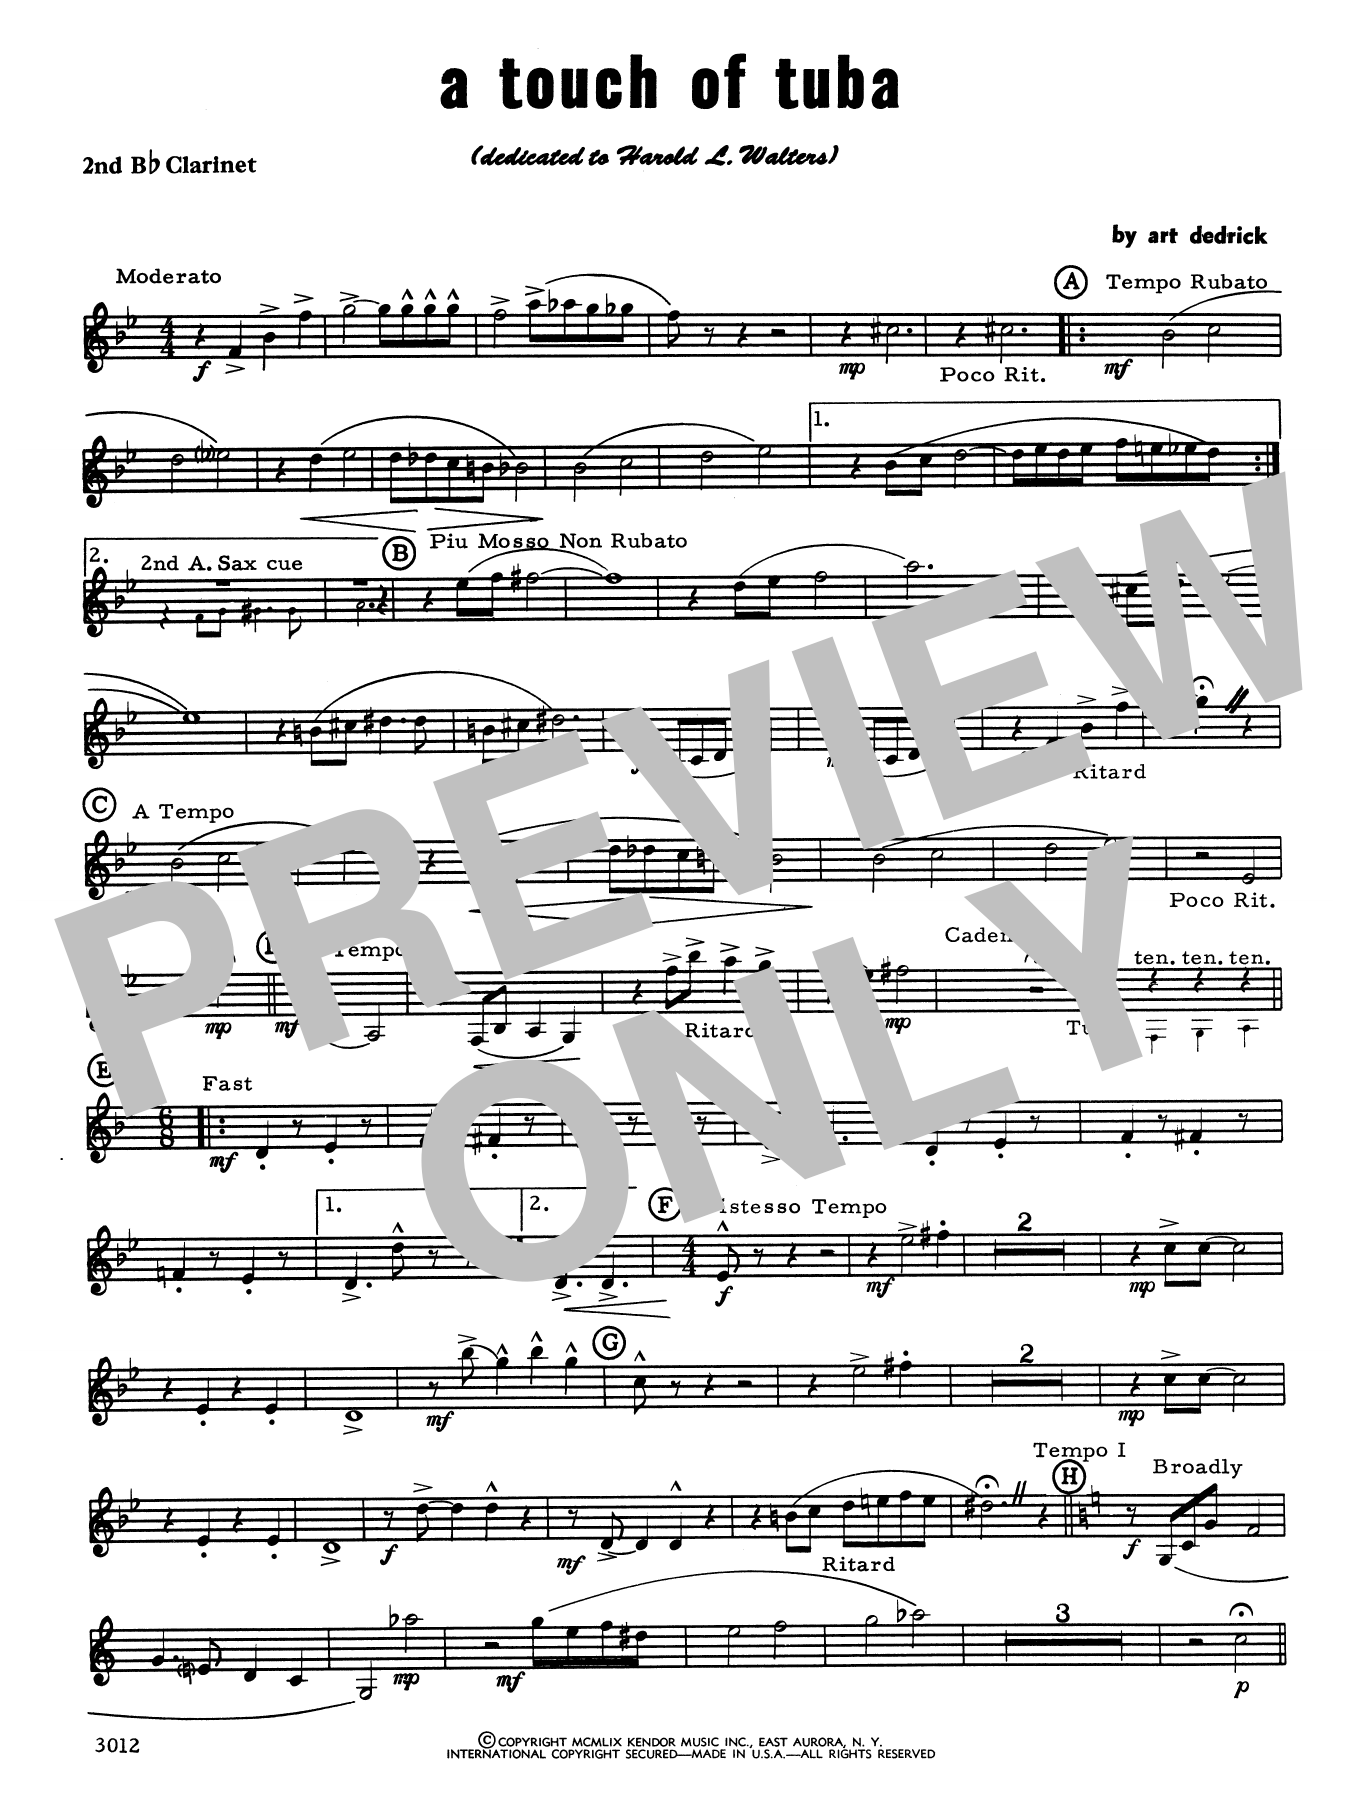 Download Art Dedrick A Touch Of Tuba - 2nd Bb Clarinet Sheet Music